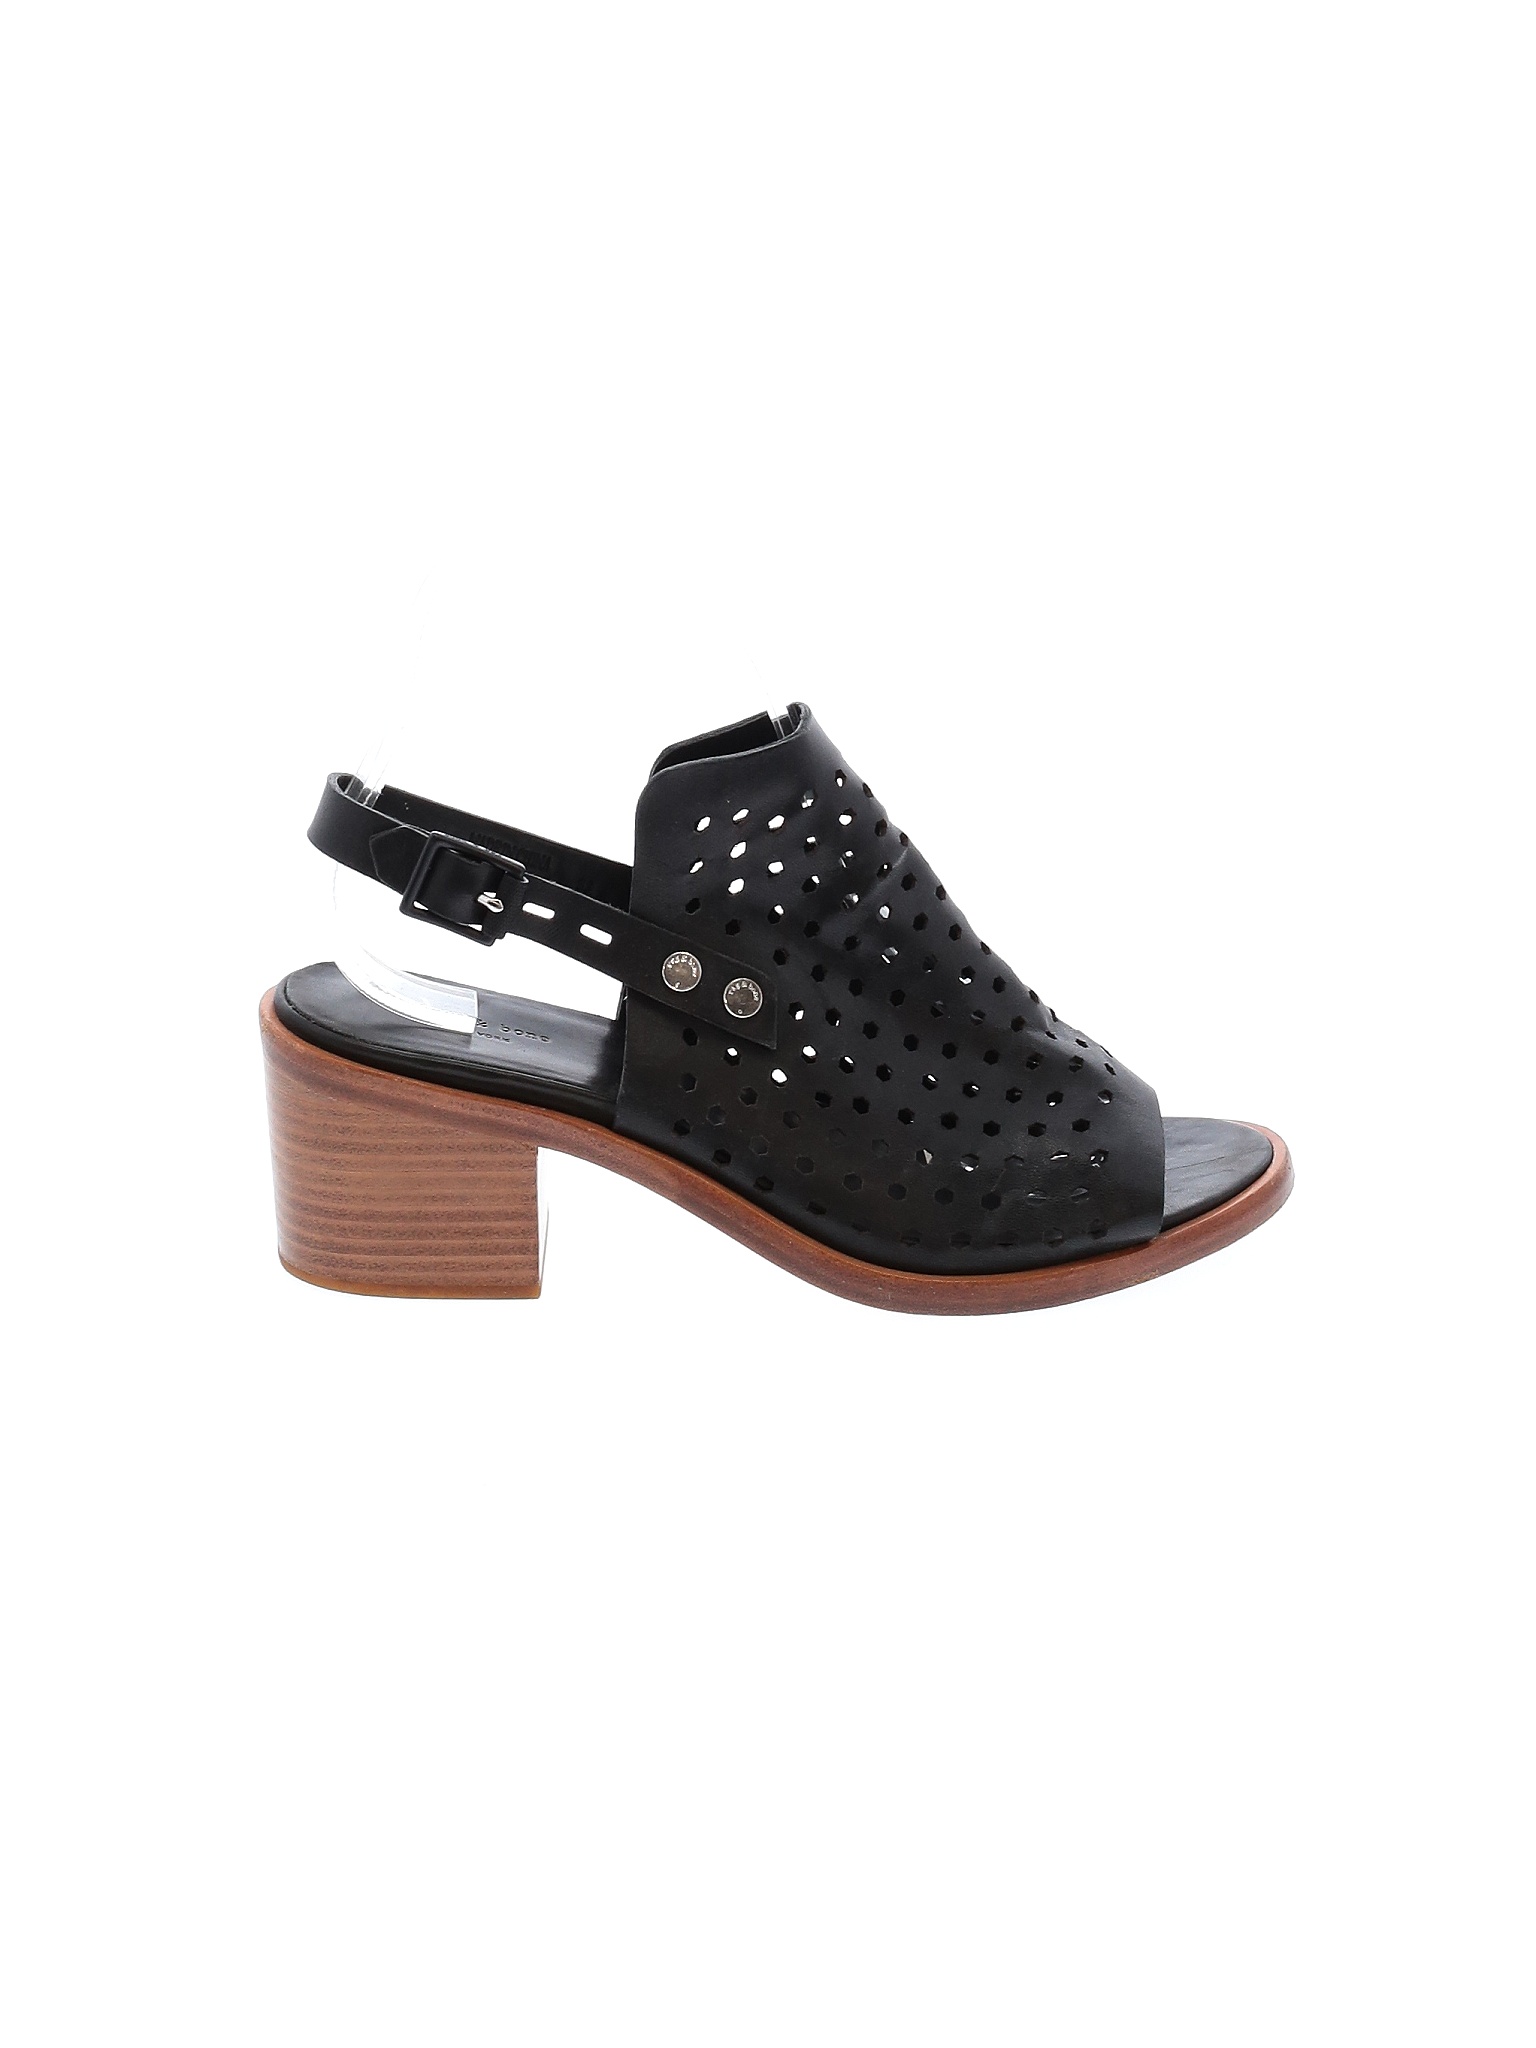 Rag & Bone 100% Leather Solid Black Heels Size 38 (EU) - 82% off | thredUP